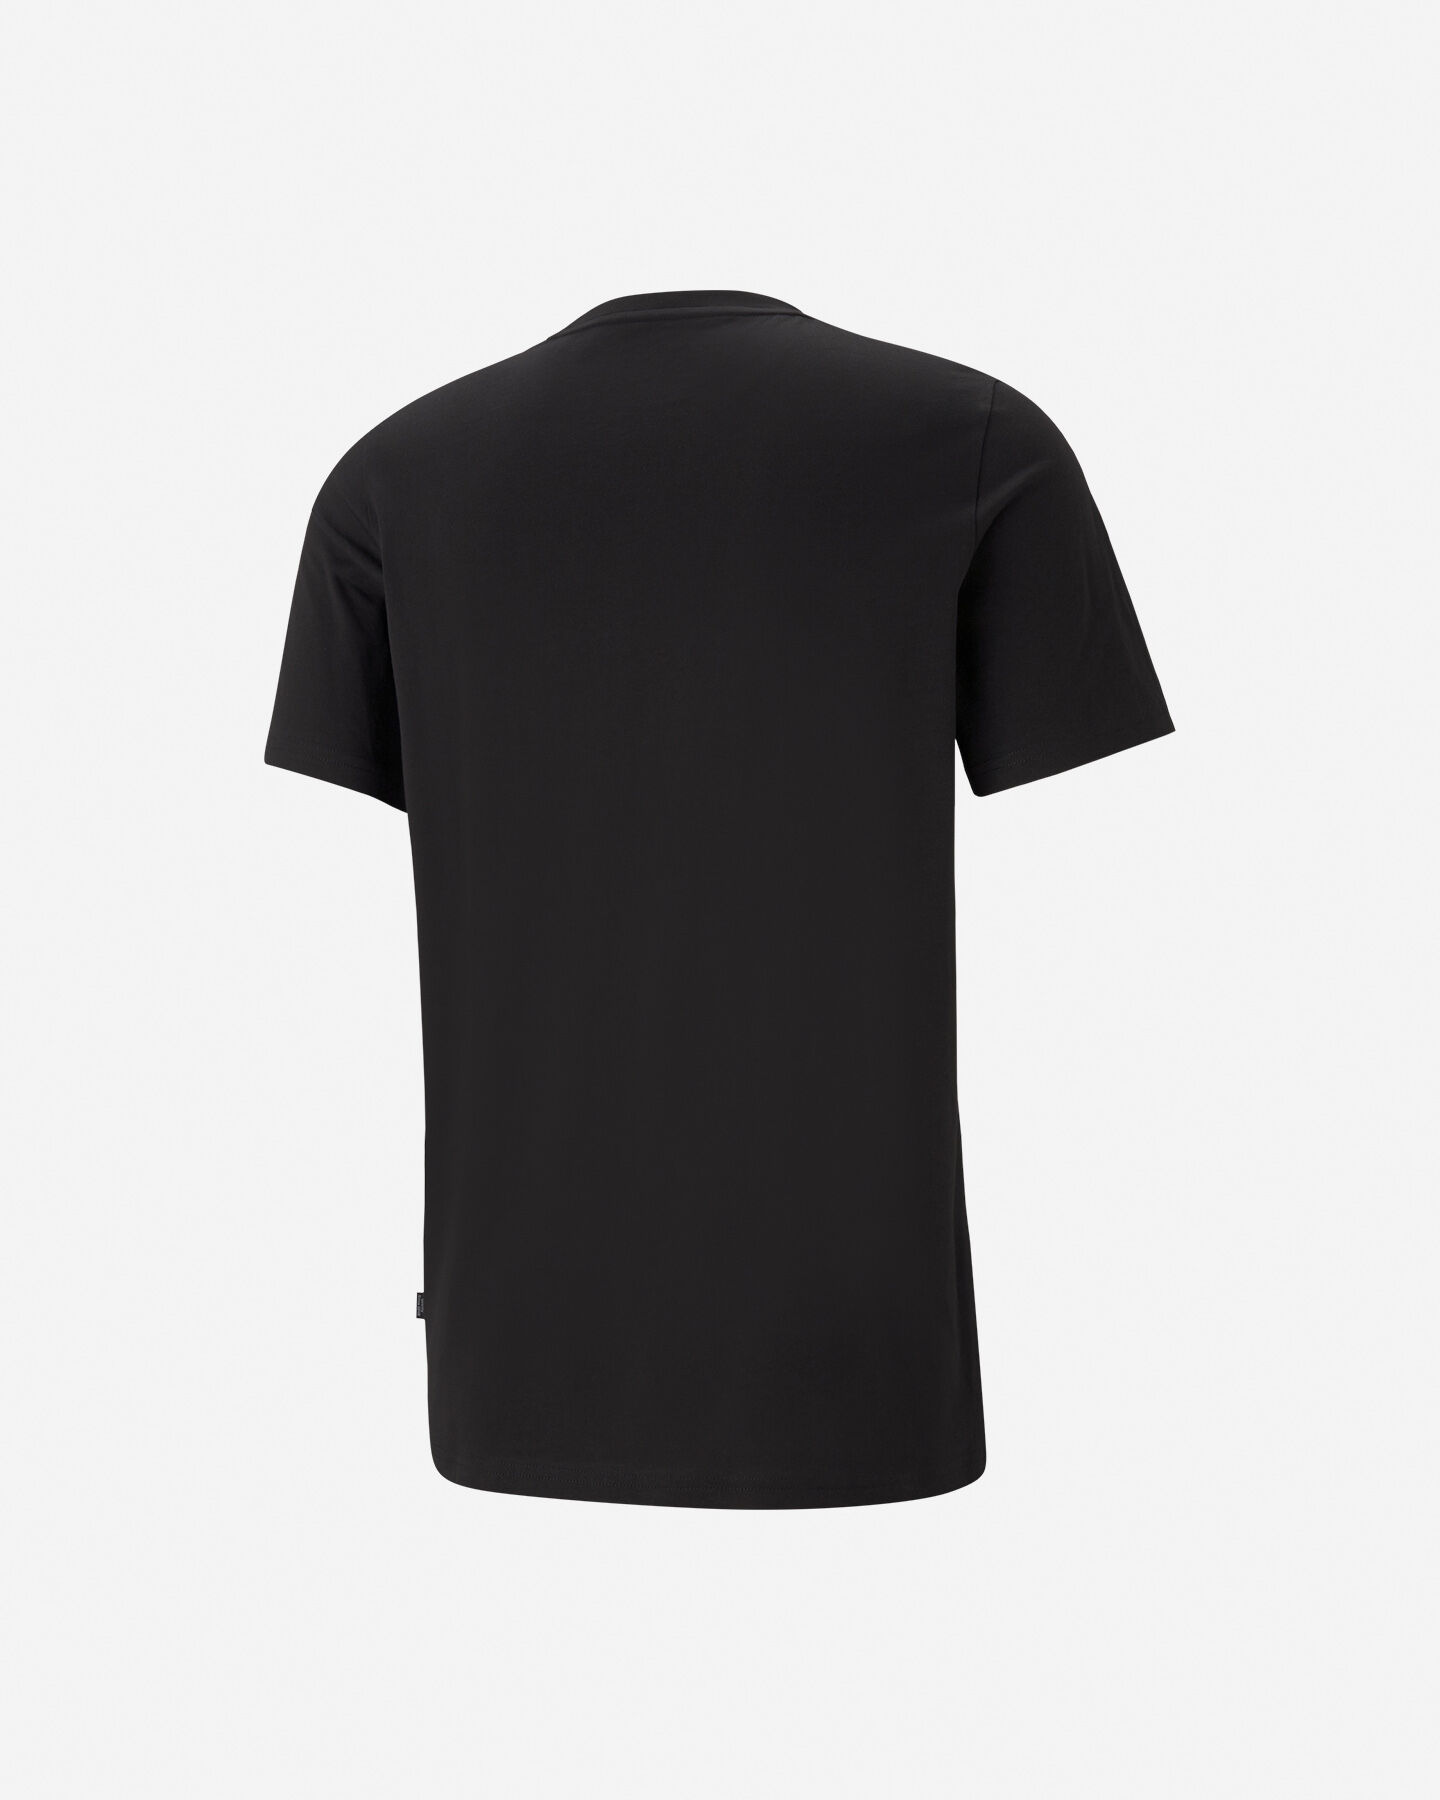  T-Shirt PUMA REBEL BIG LOGO M S5283971|01|XS scatto 1